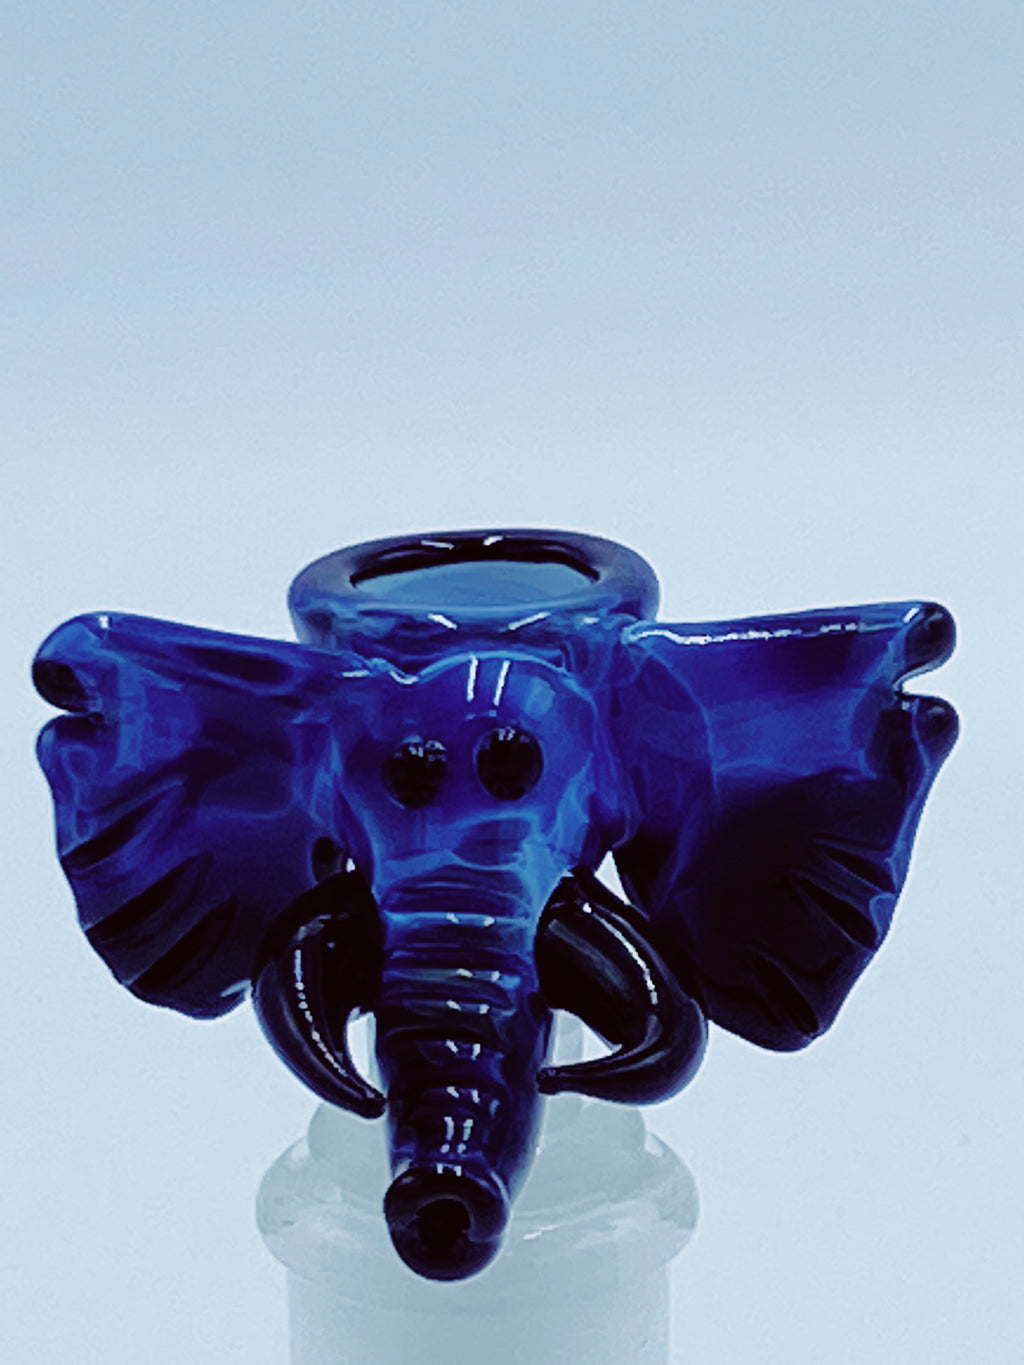 TEAR E BLUE ELEPHANT - Smoke Country - Land of the artistic glass blown bongs